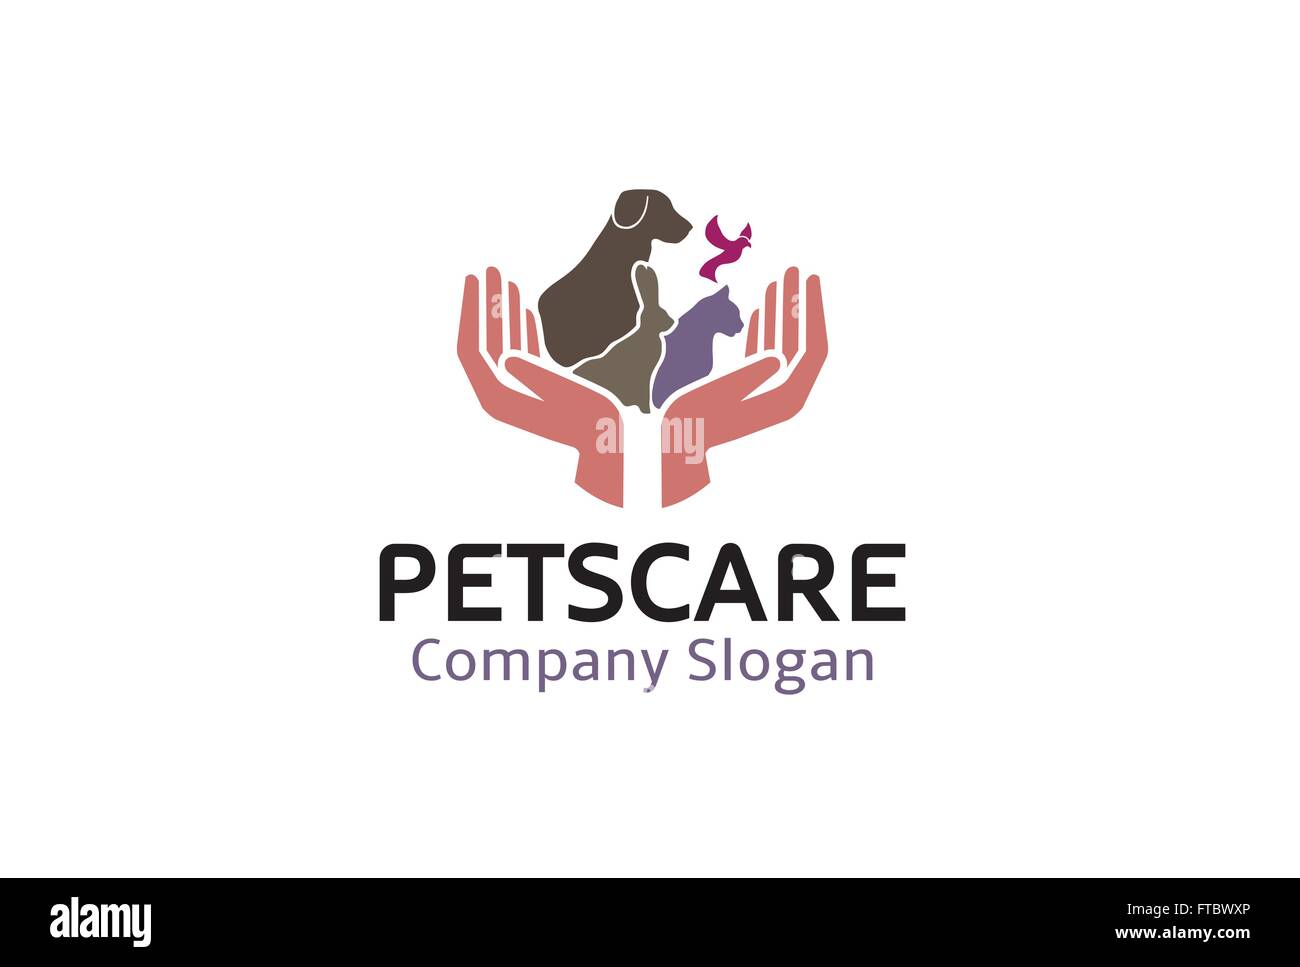 Pets care design Illustration Stock Vector